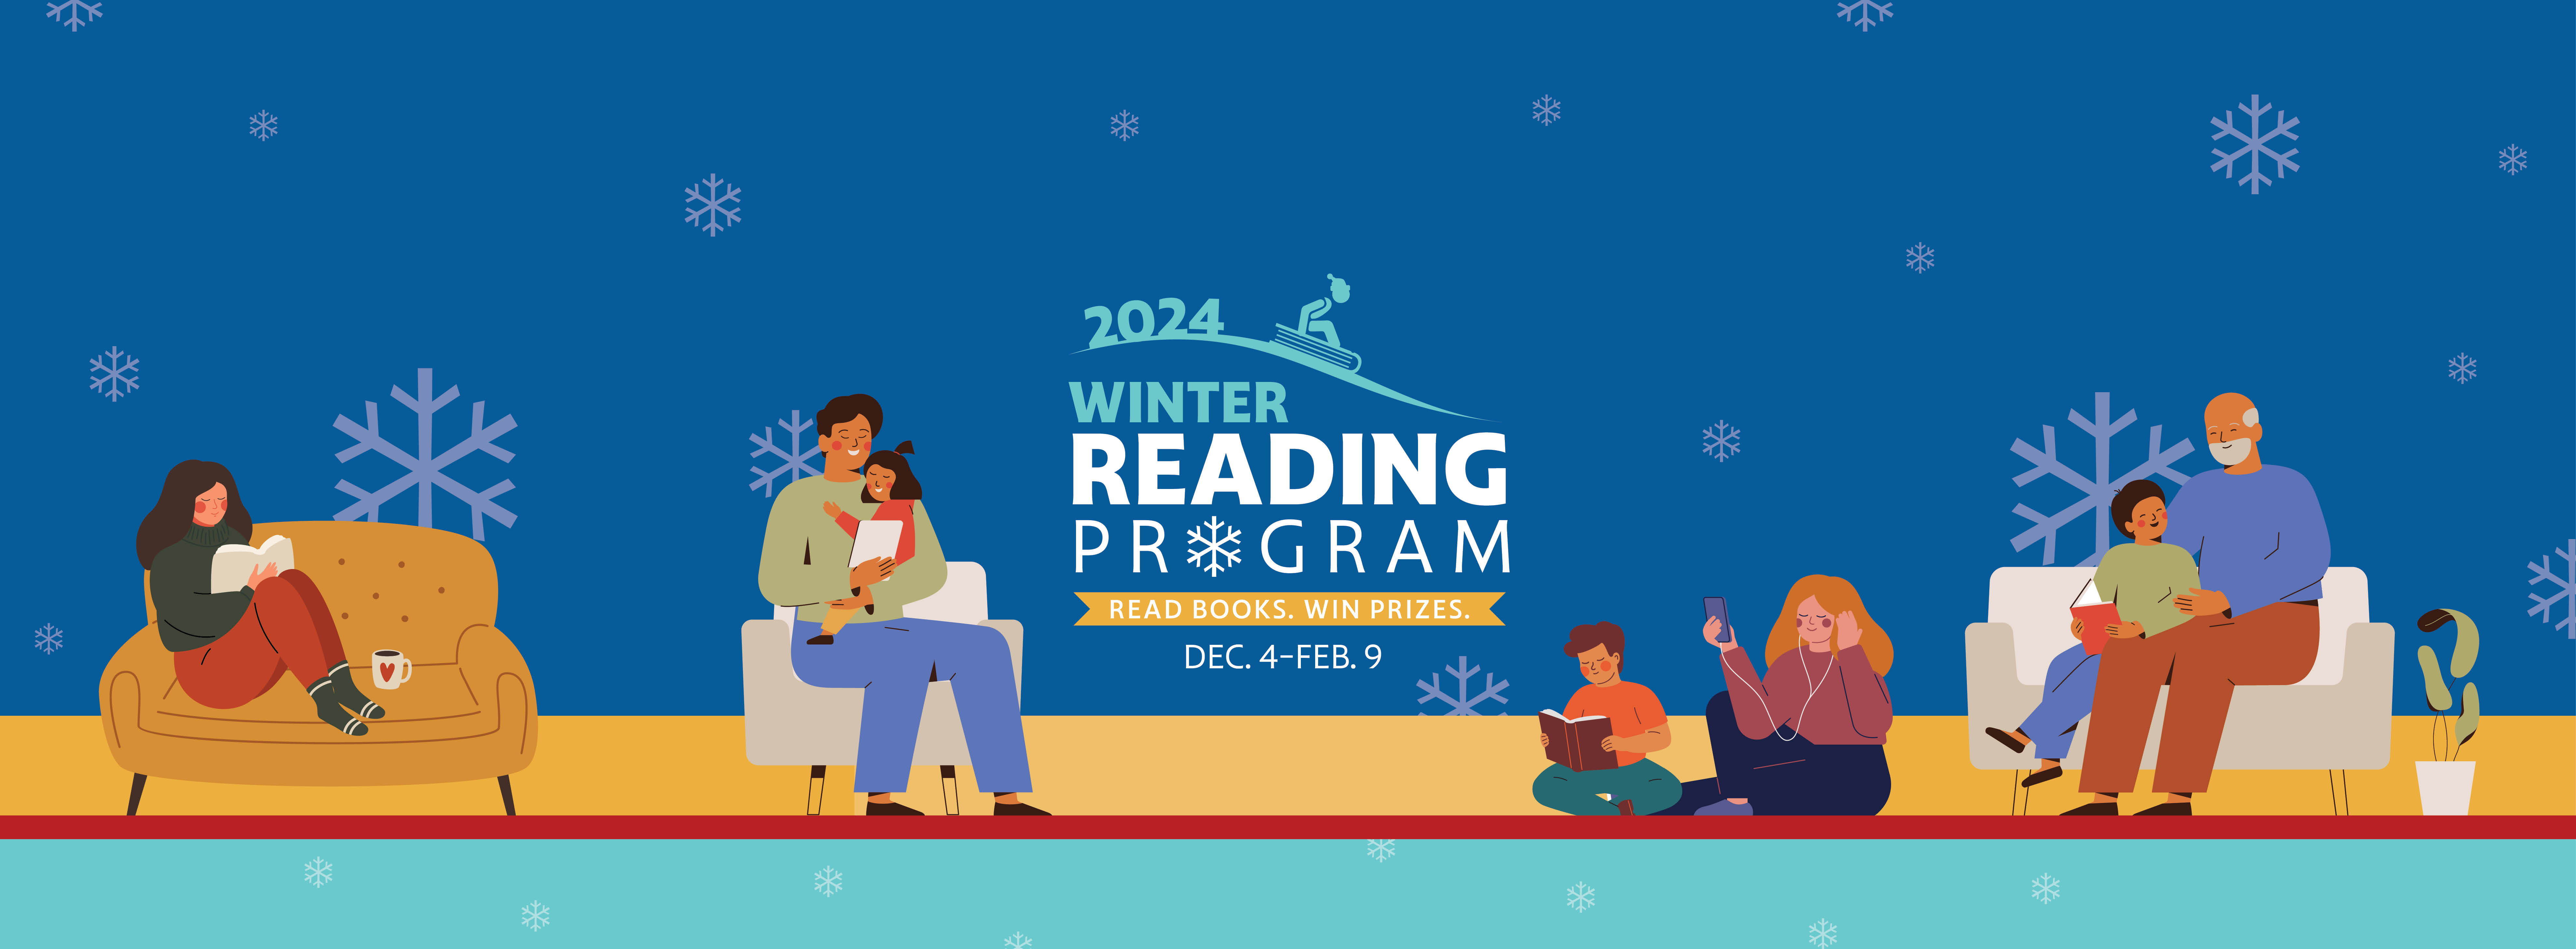 LIB23_147 Winter Reading Program Web Banner.jpg